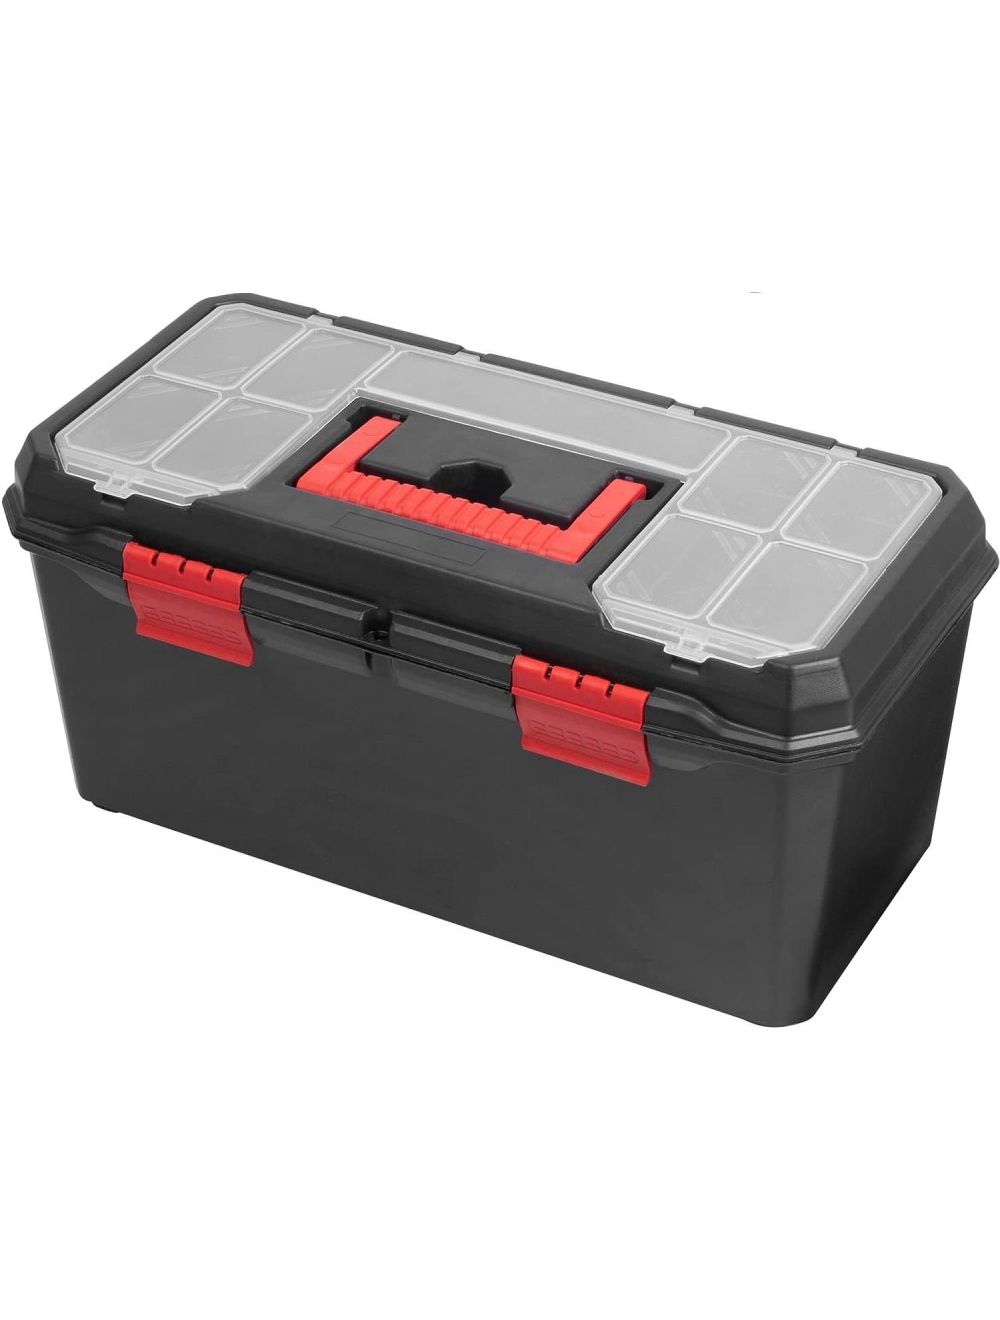 19 Heavy Duty Plastic Toolbox, Multi-Purpose Storage Tool Box